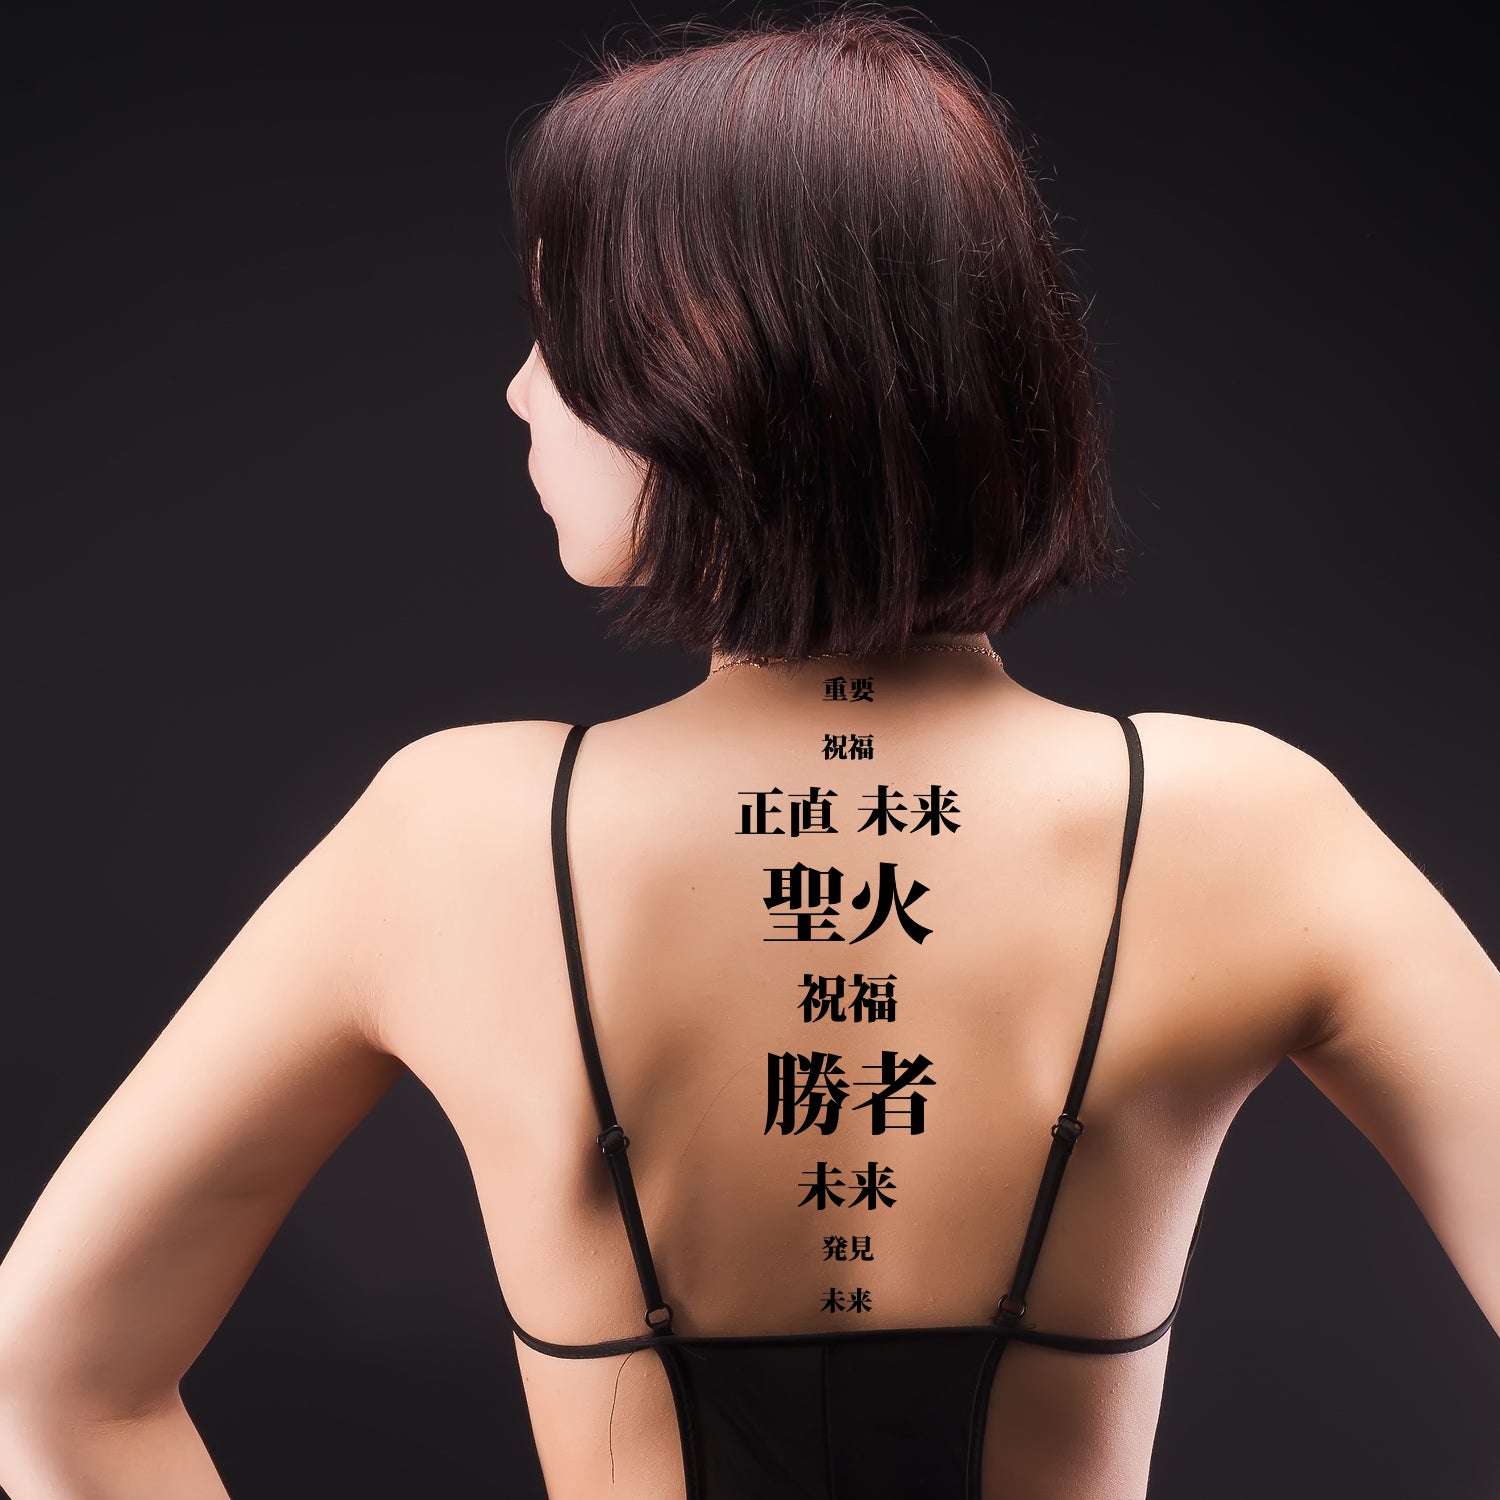 Kanji - Bling Art Temporary Tattoos Black Tribal Set of 7 Unisex Tattoos